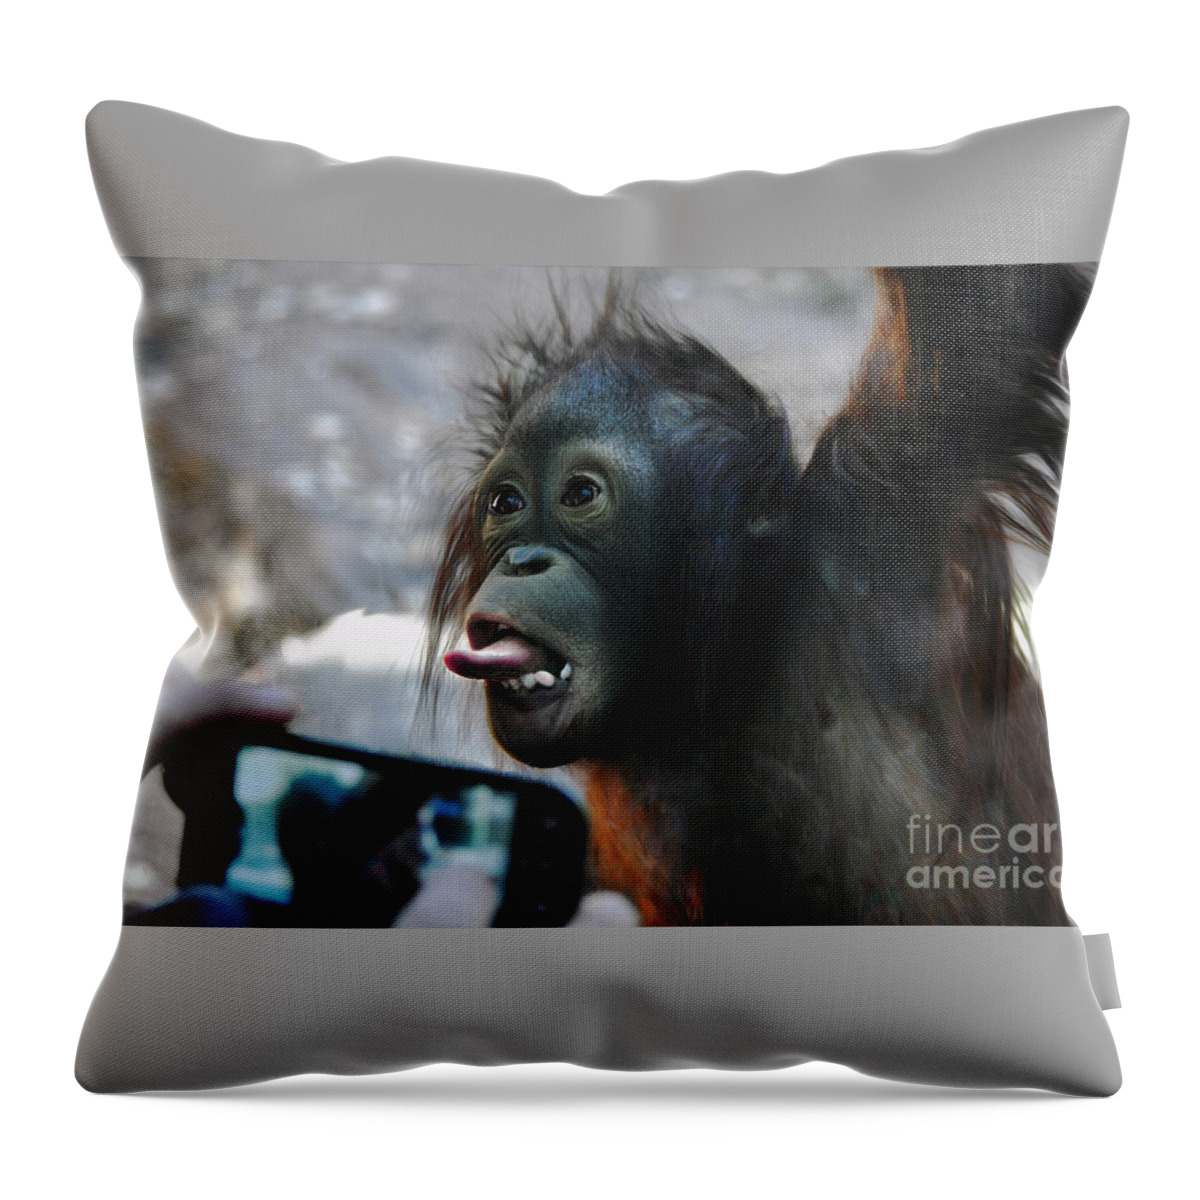  Baby Throw Pillow featuring the photograph Baby Orangutan #1 by Savannah Gibbs